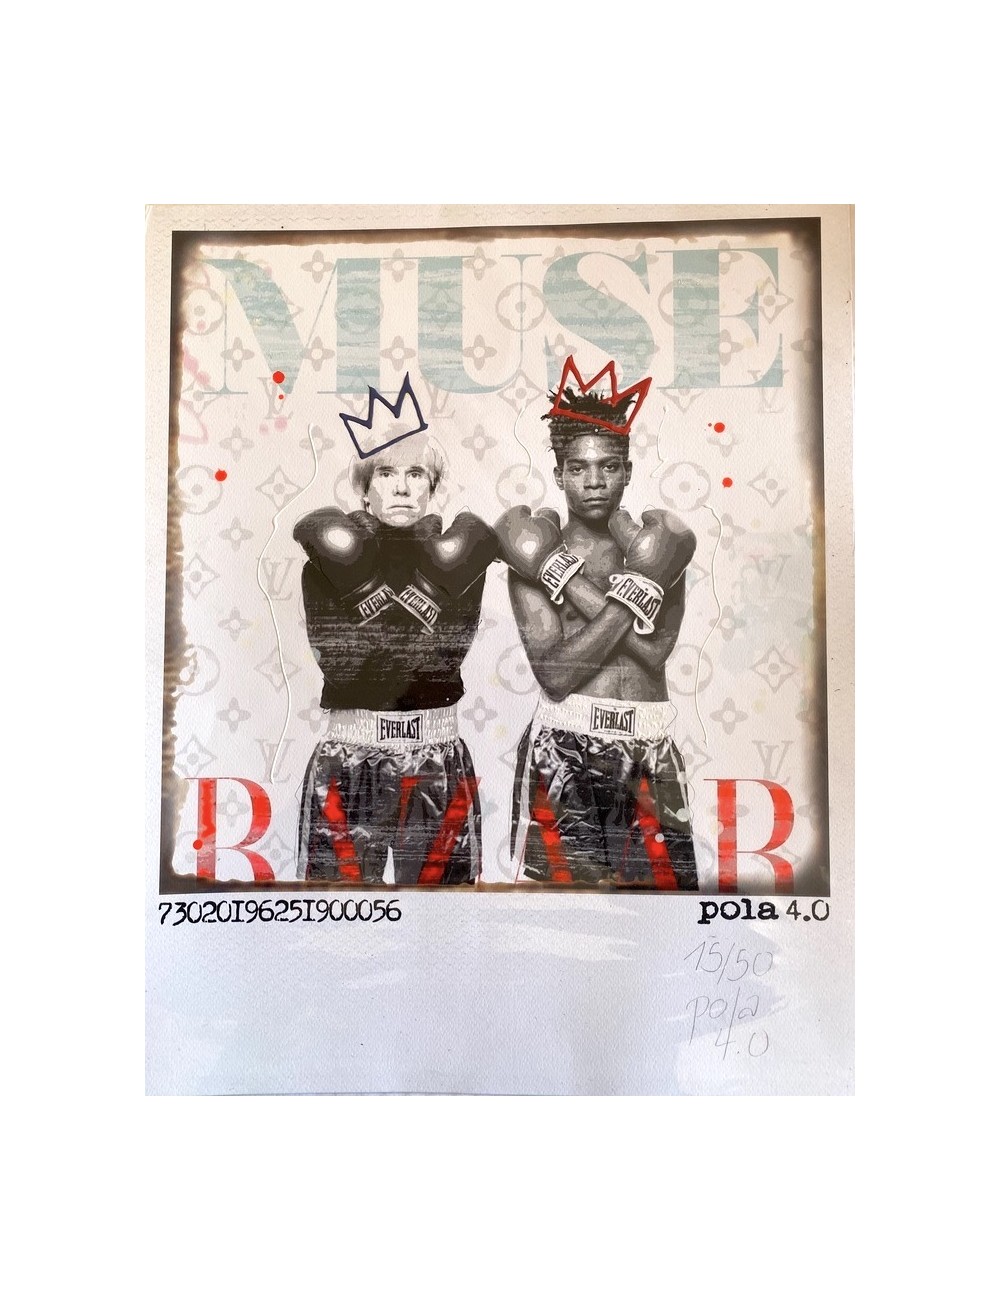 Edition rehaussée Andy Warhol et Basquiat n°15/50 de Pola 4.0